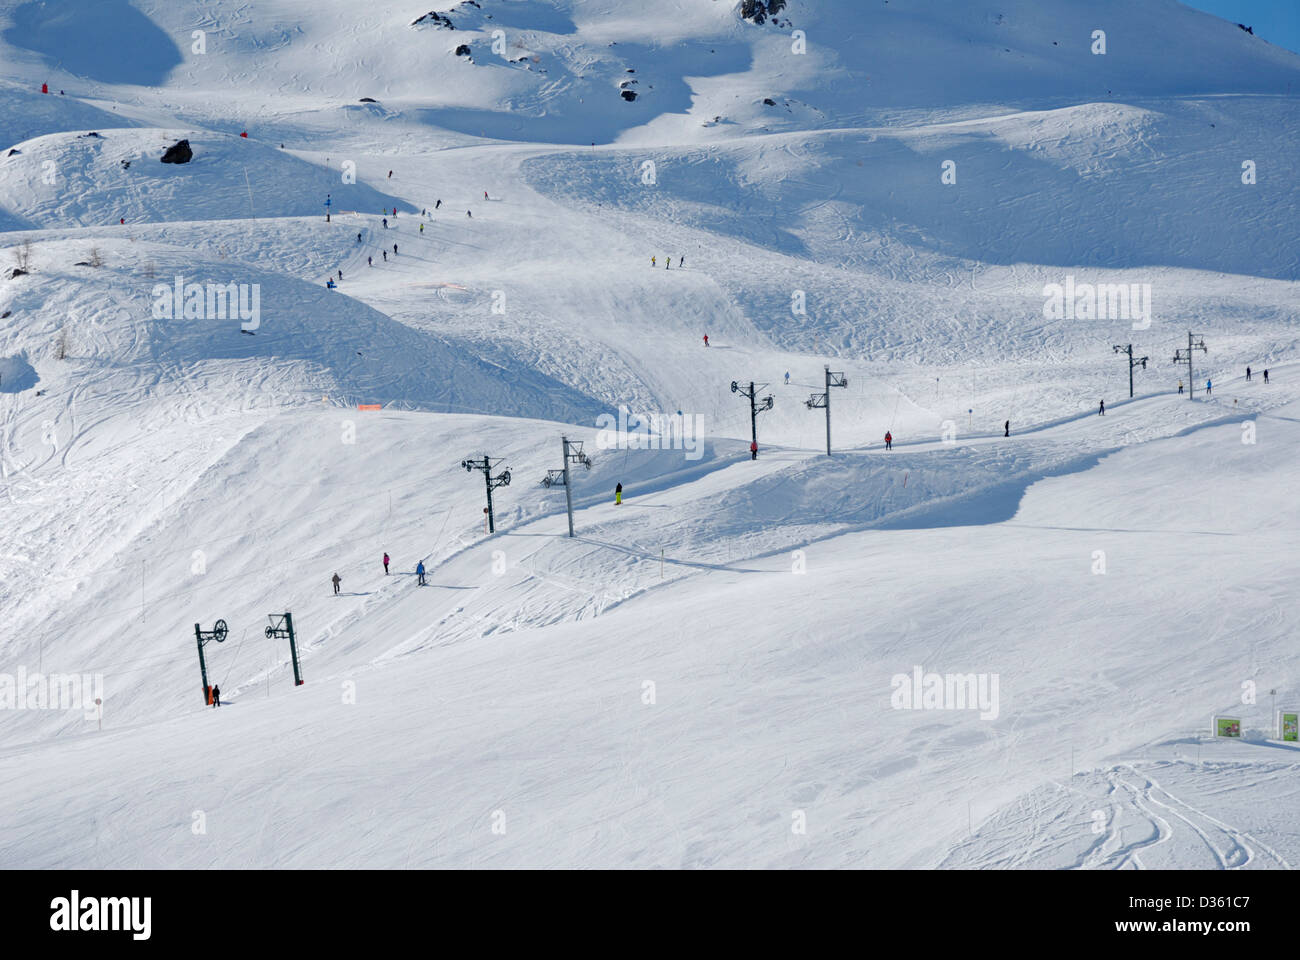 Drag lift, in the French ski resort Serre Chevalier located in the Alps. Stock Photo